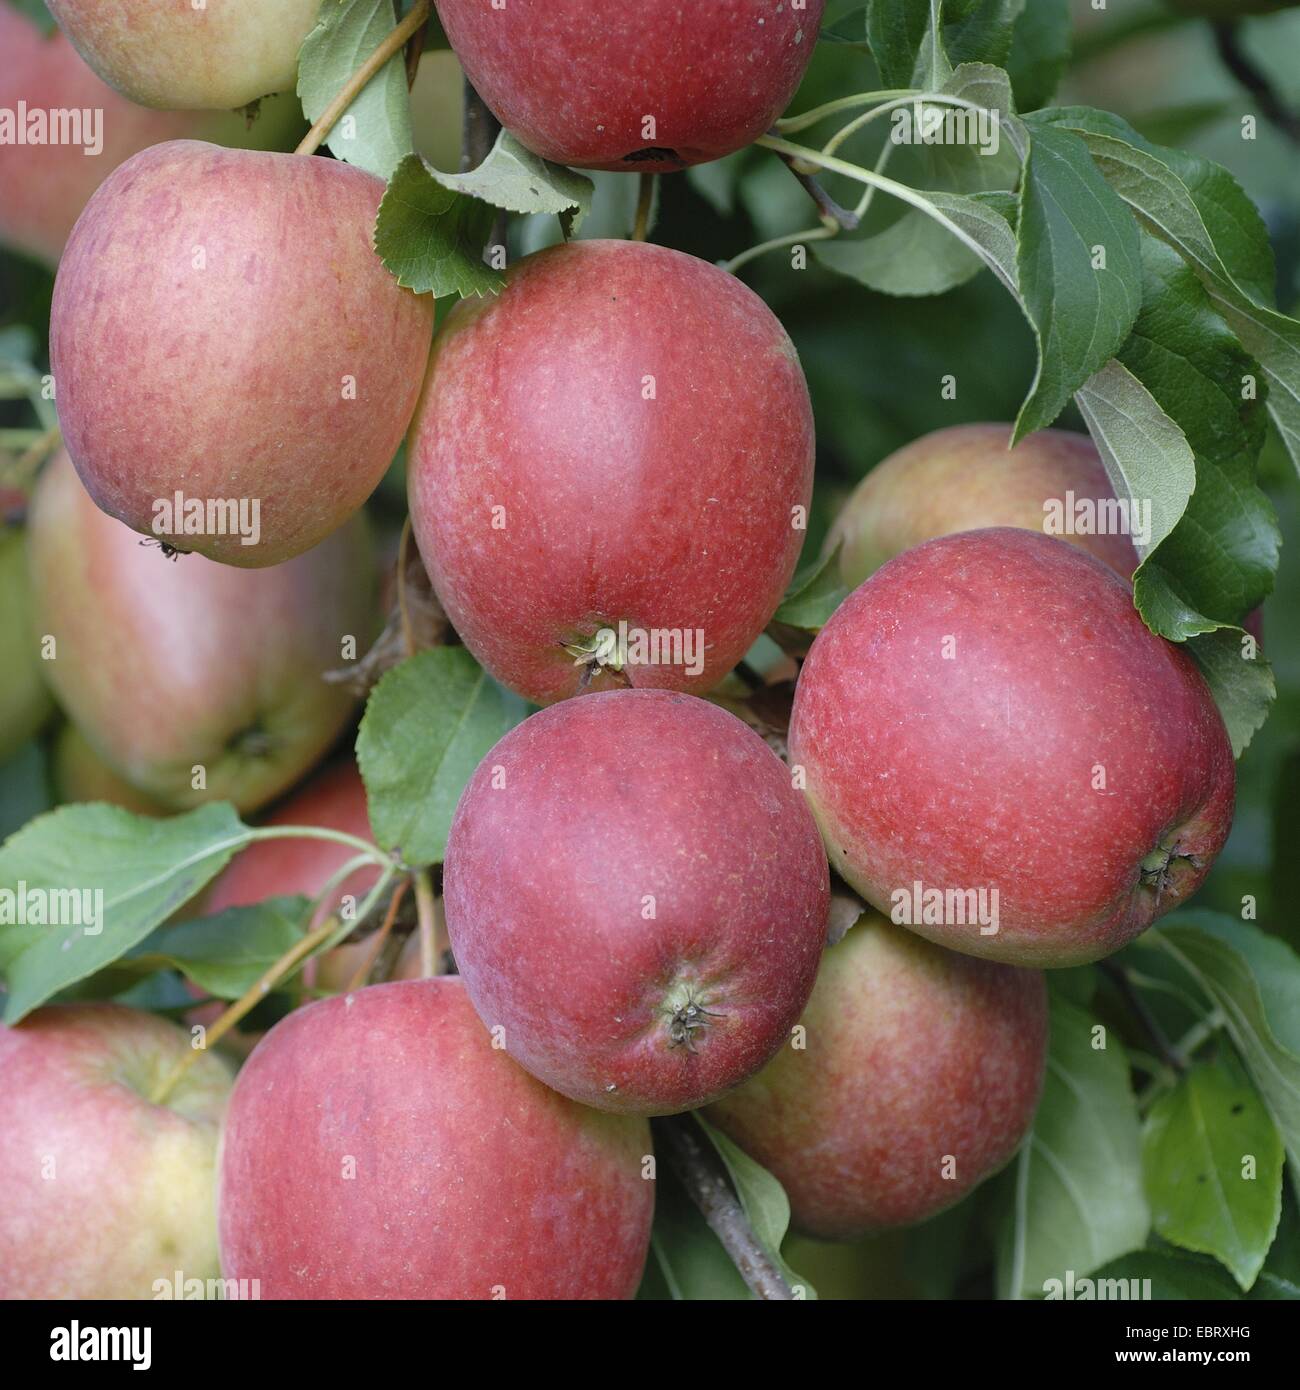 Apfelbaum (Malus Domestica 'Rewena', Malus Domestica Rewena), Sorte Rewena, Äpfel auf dem Baum Stockfoto